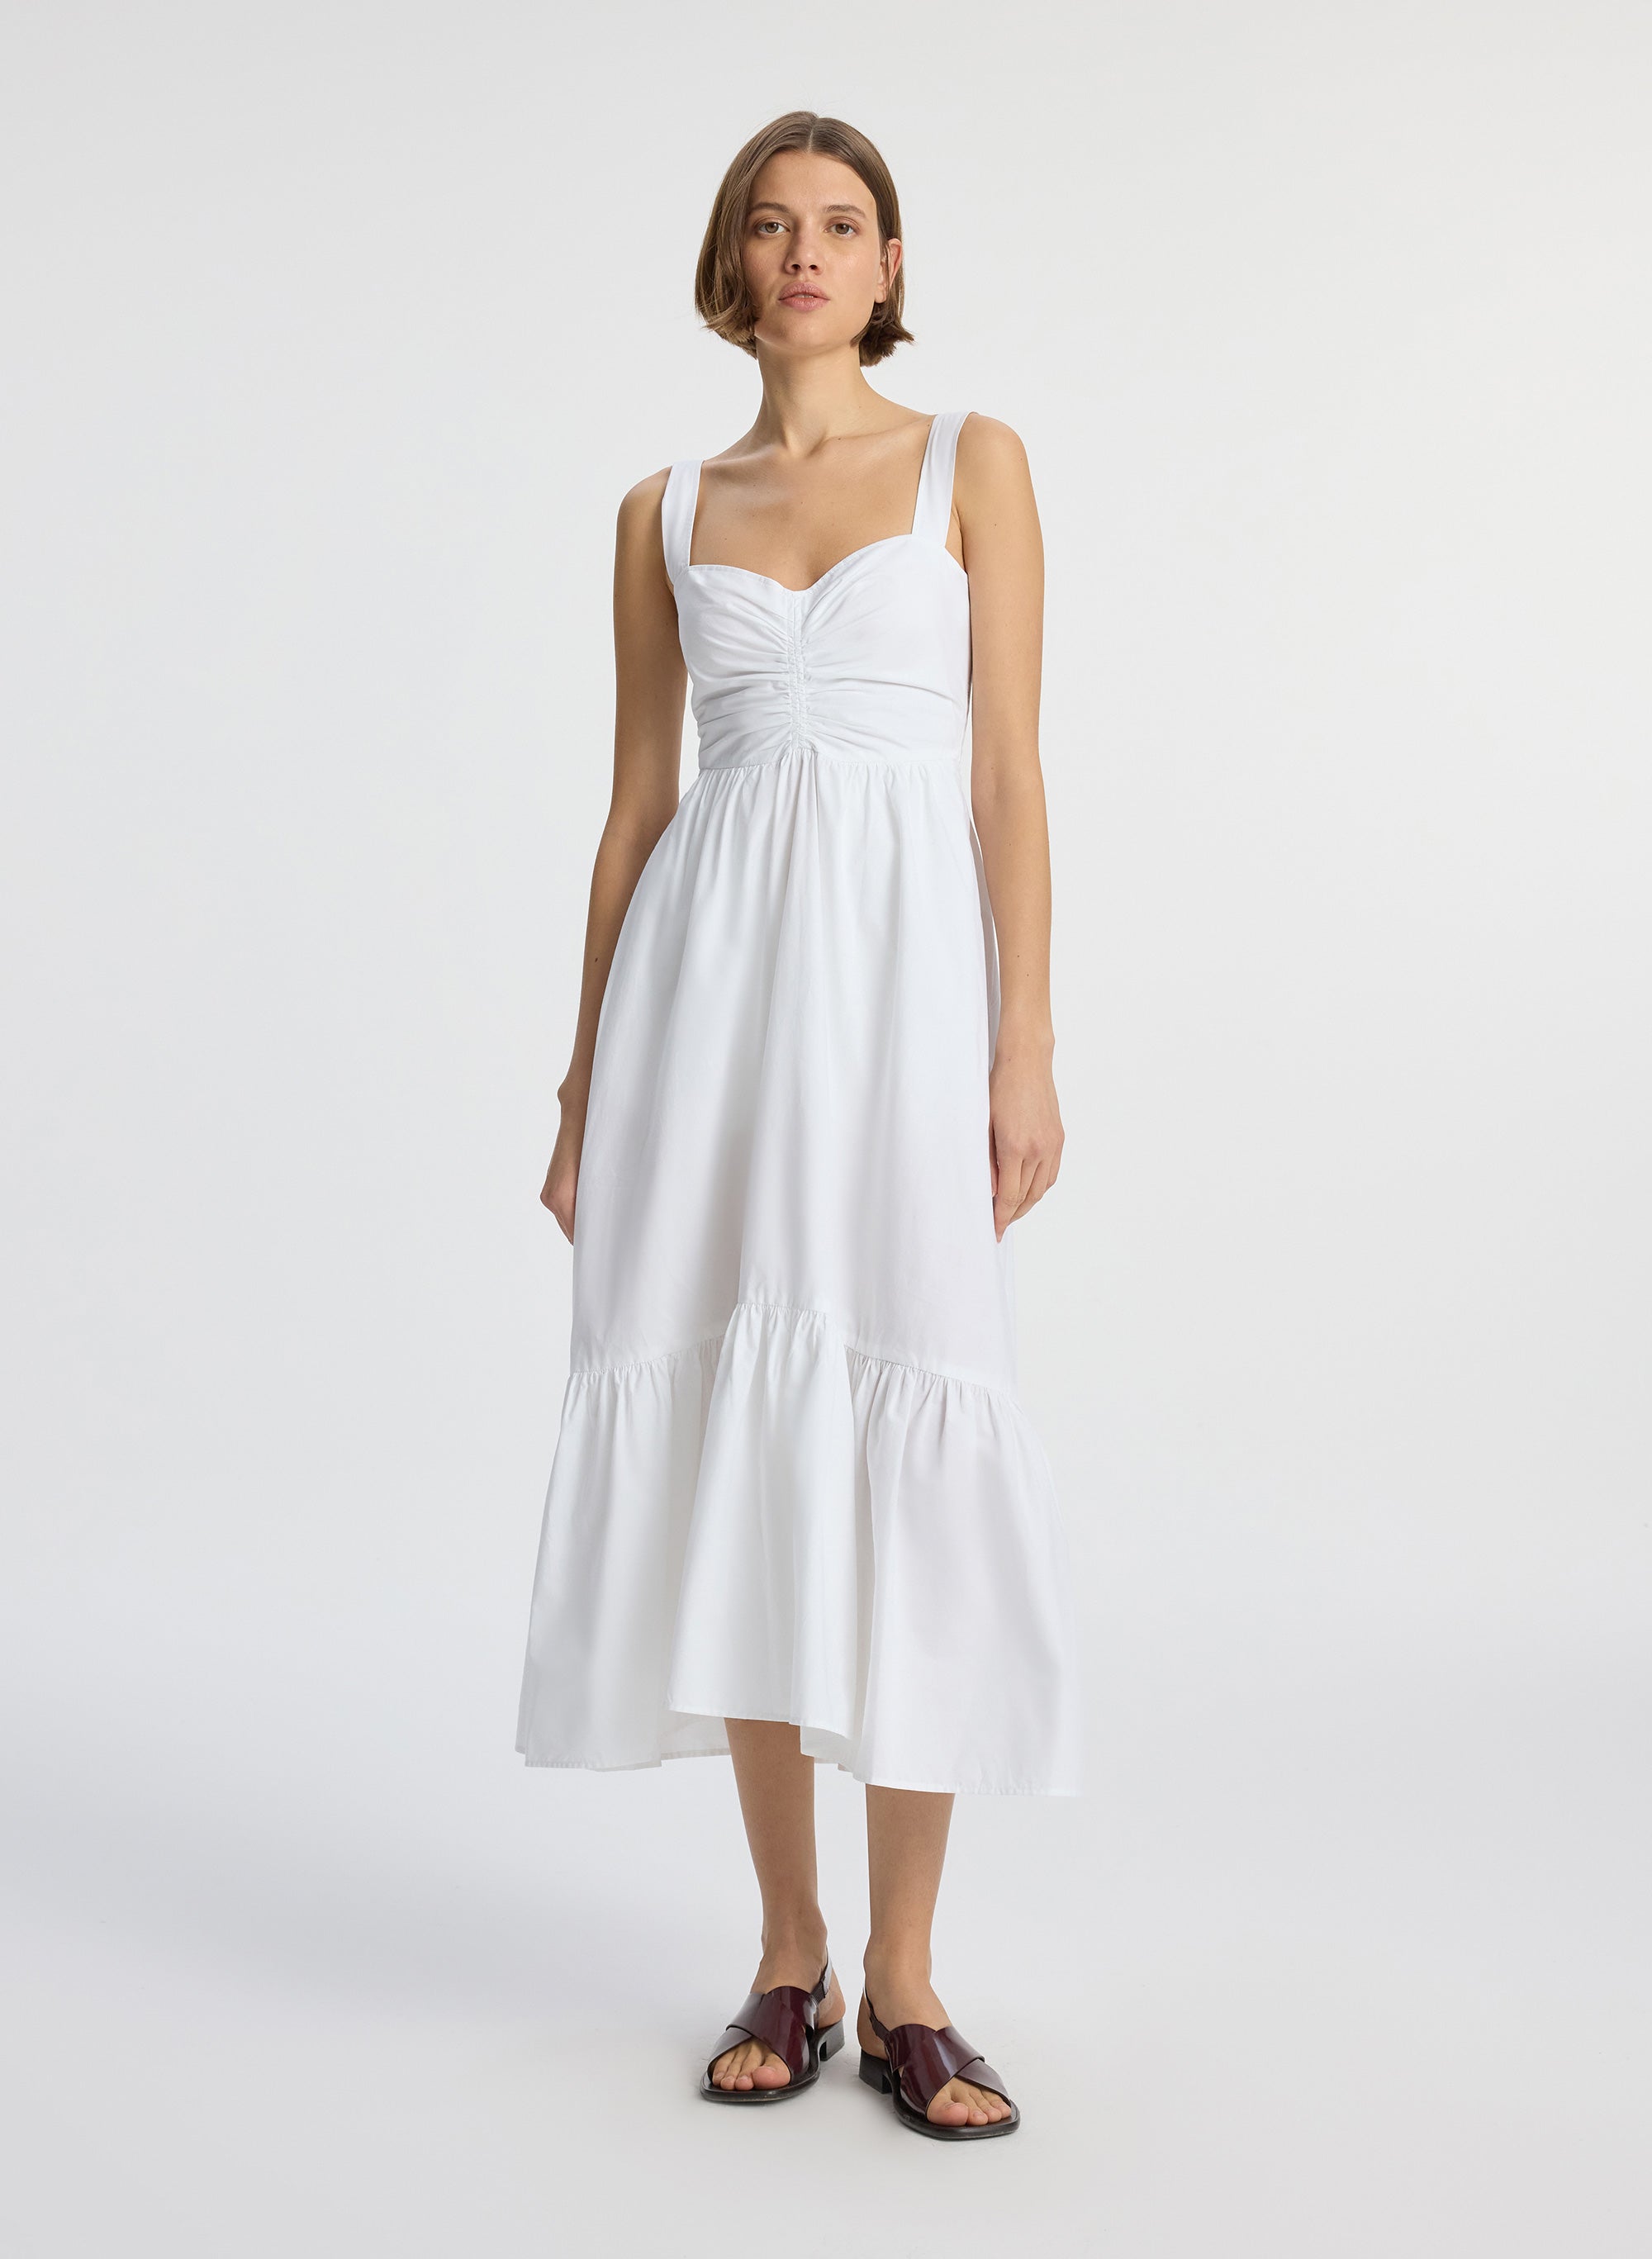 Dresses - Casual & Designer Work Dresses for Spring + Summer by